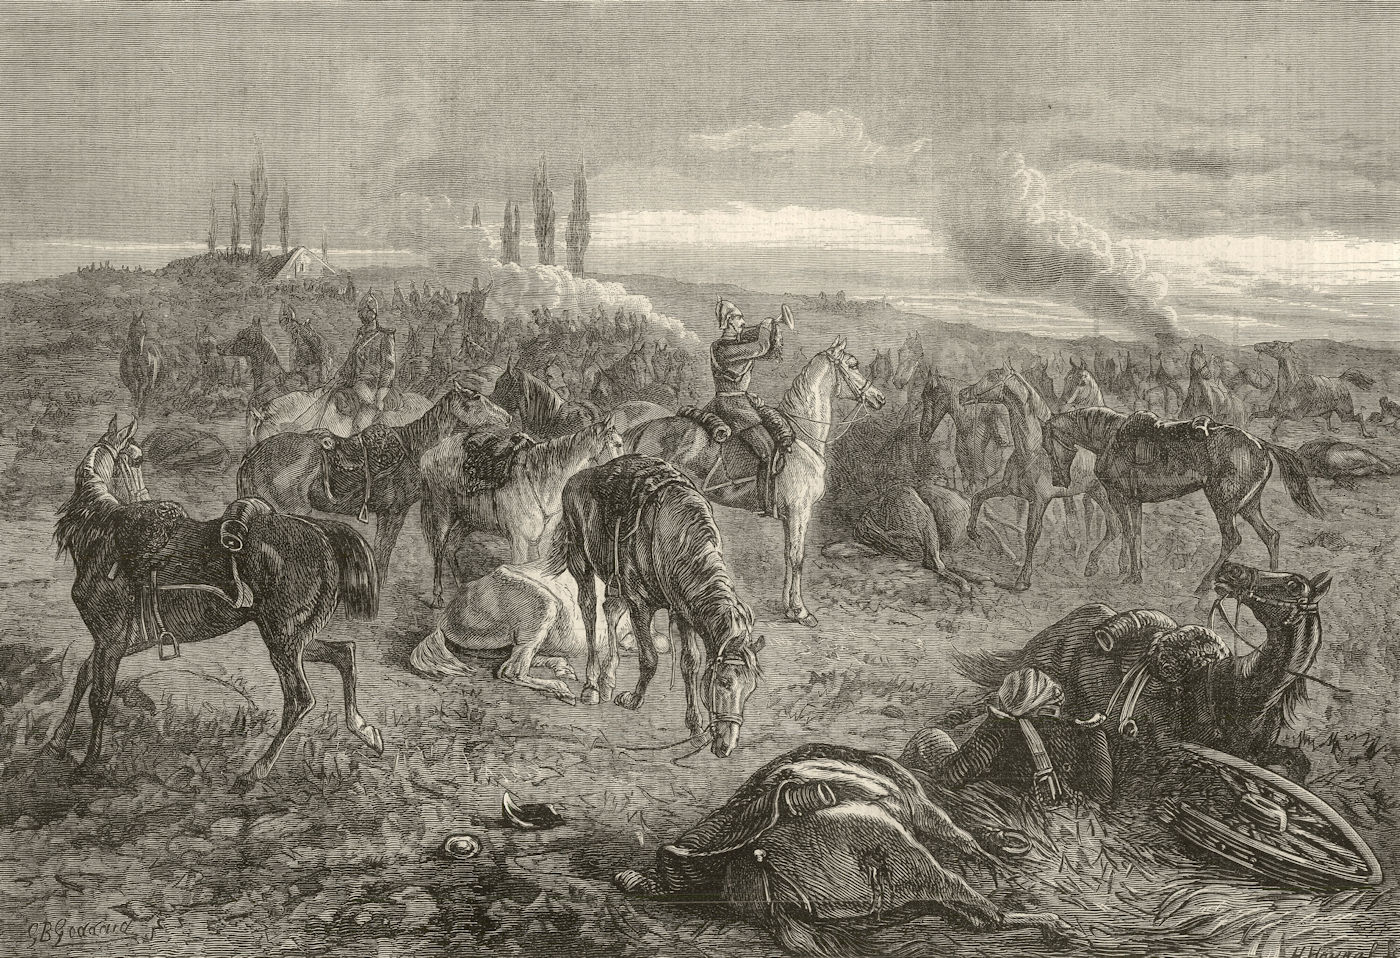 Associate Product Riderless horses answer Regimental call after battle. Franco-Prussian War 1870